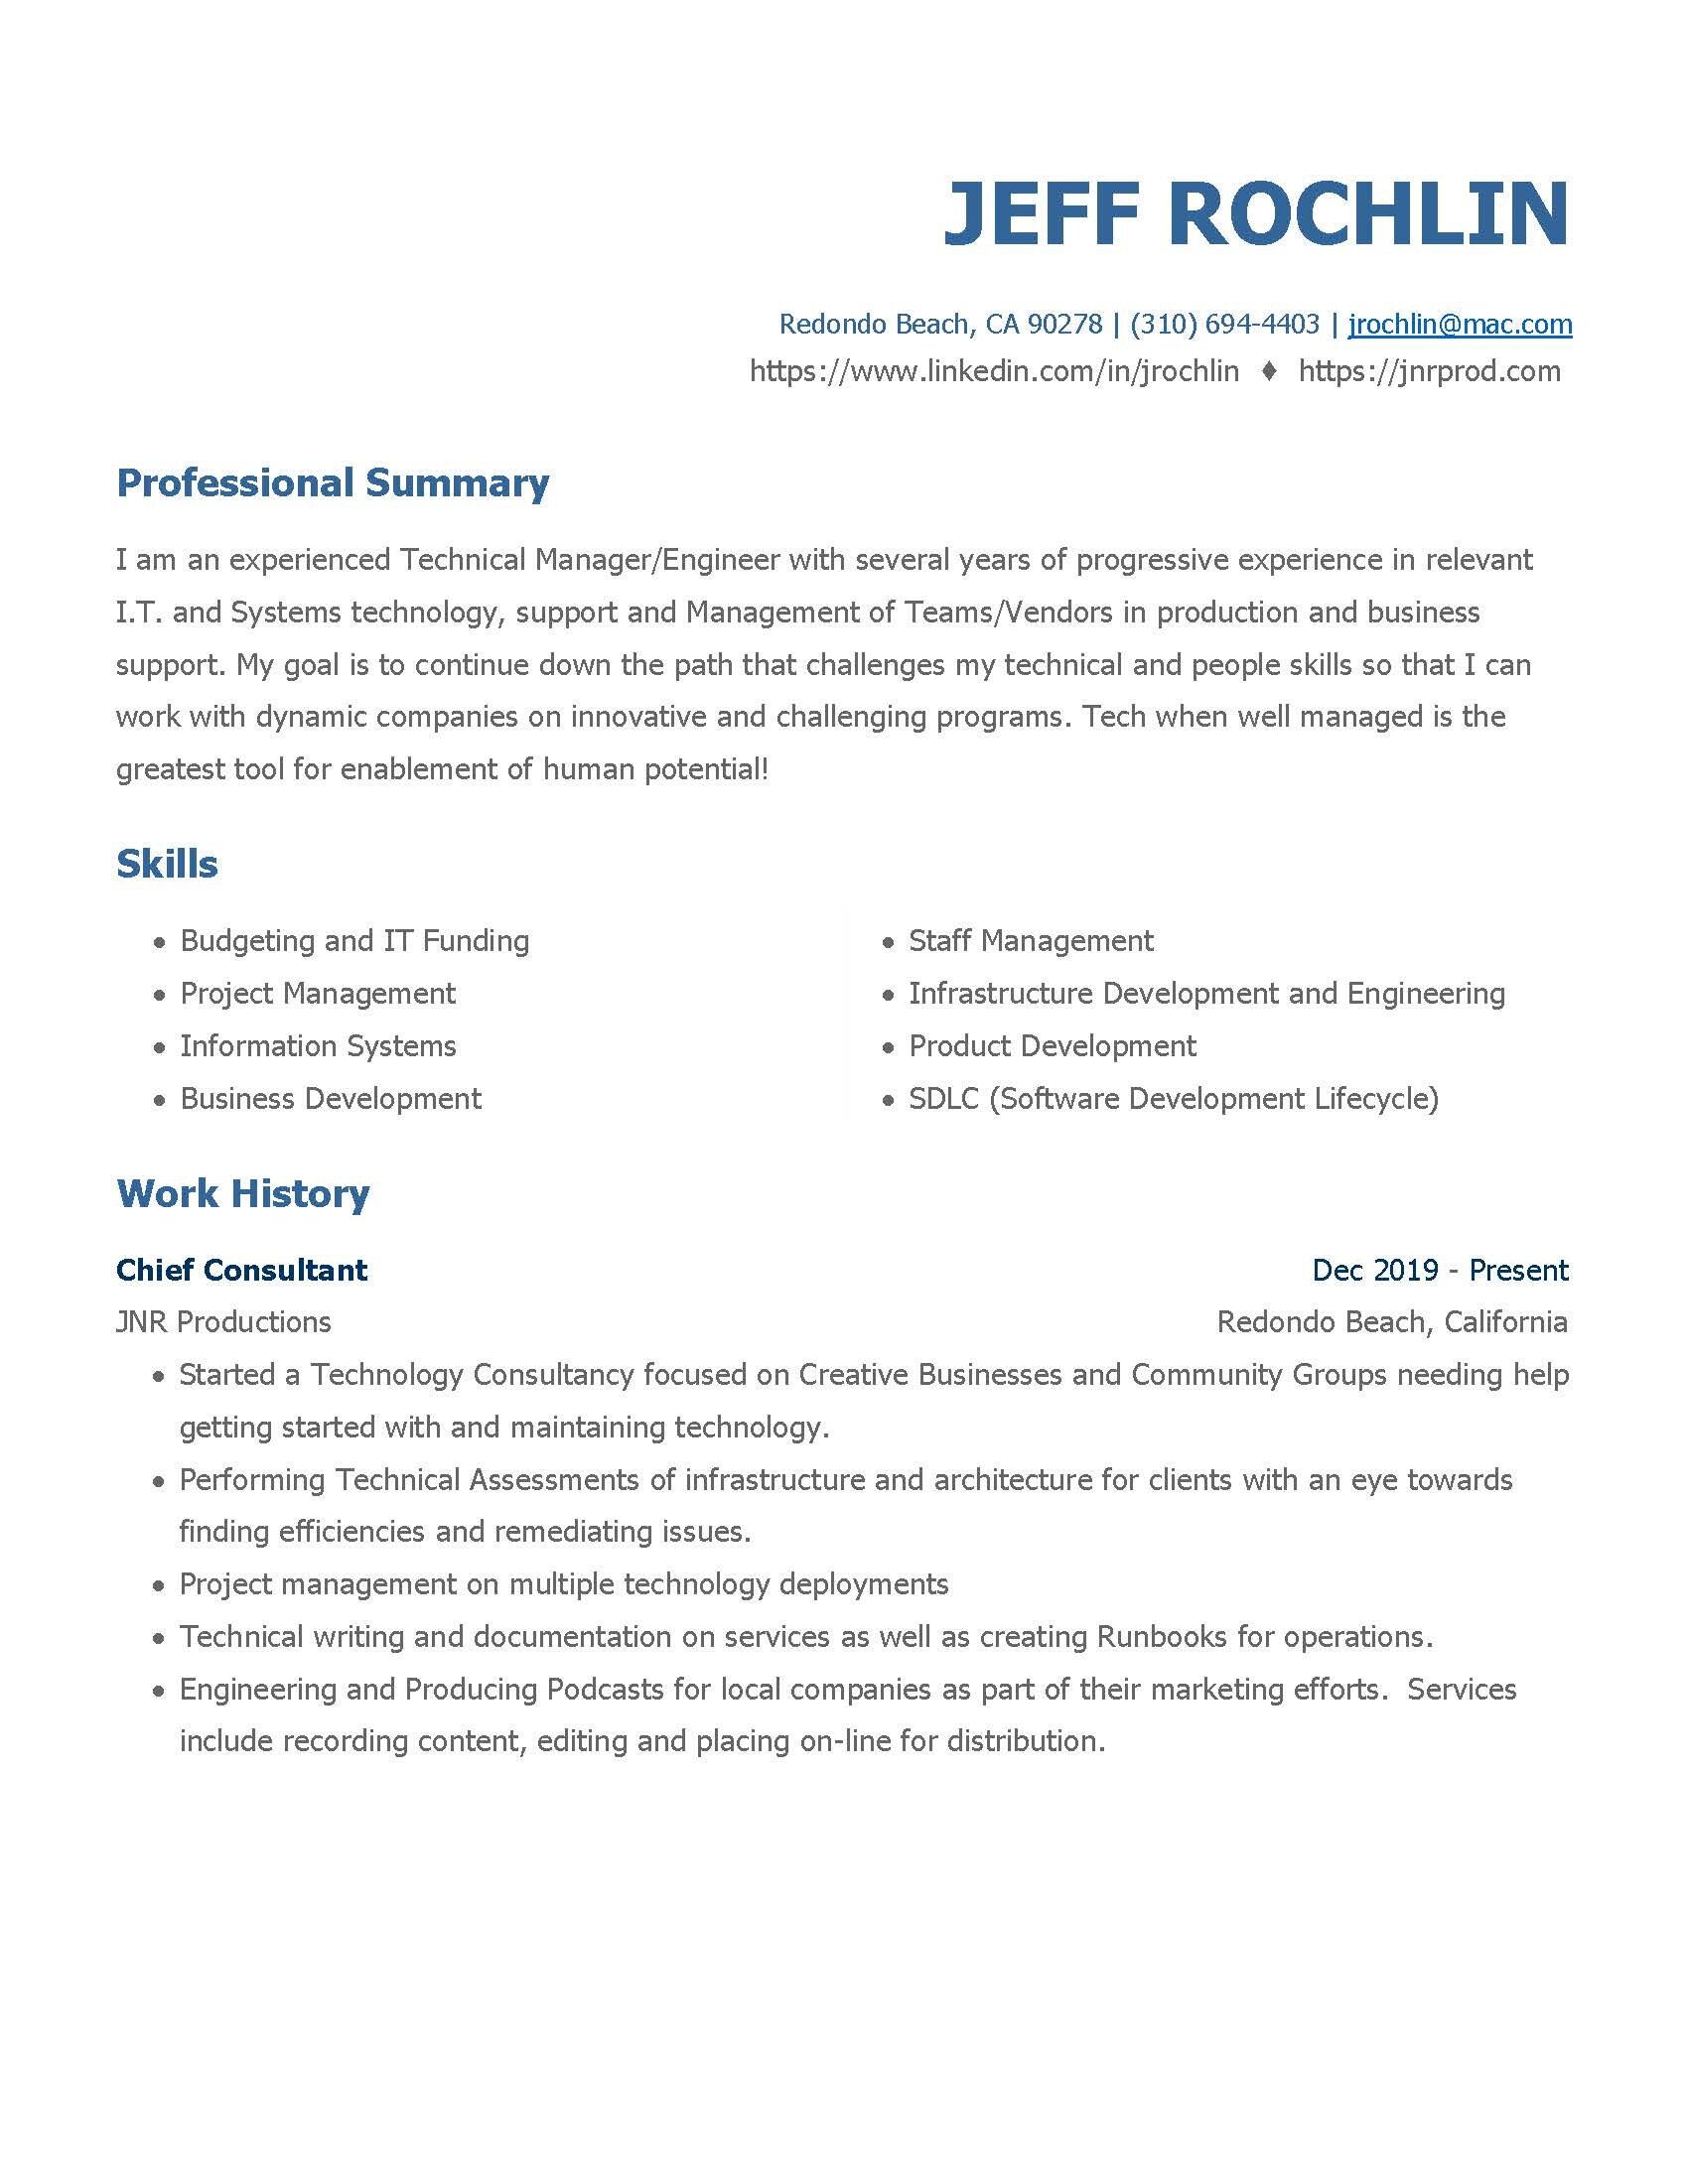 Jeff Rochlin Resume-Sep20_Page_1.jpg